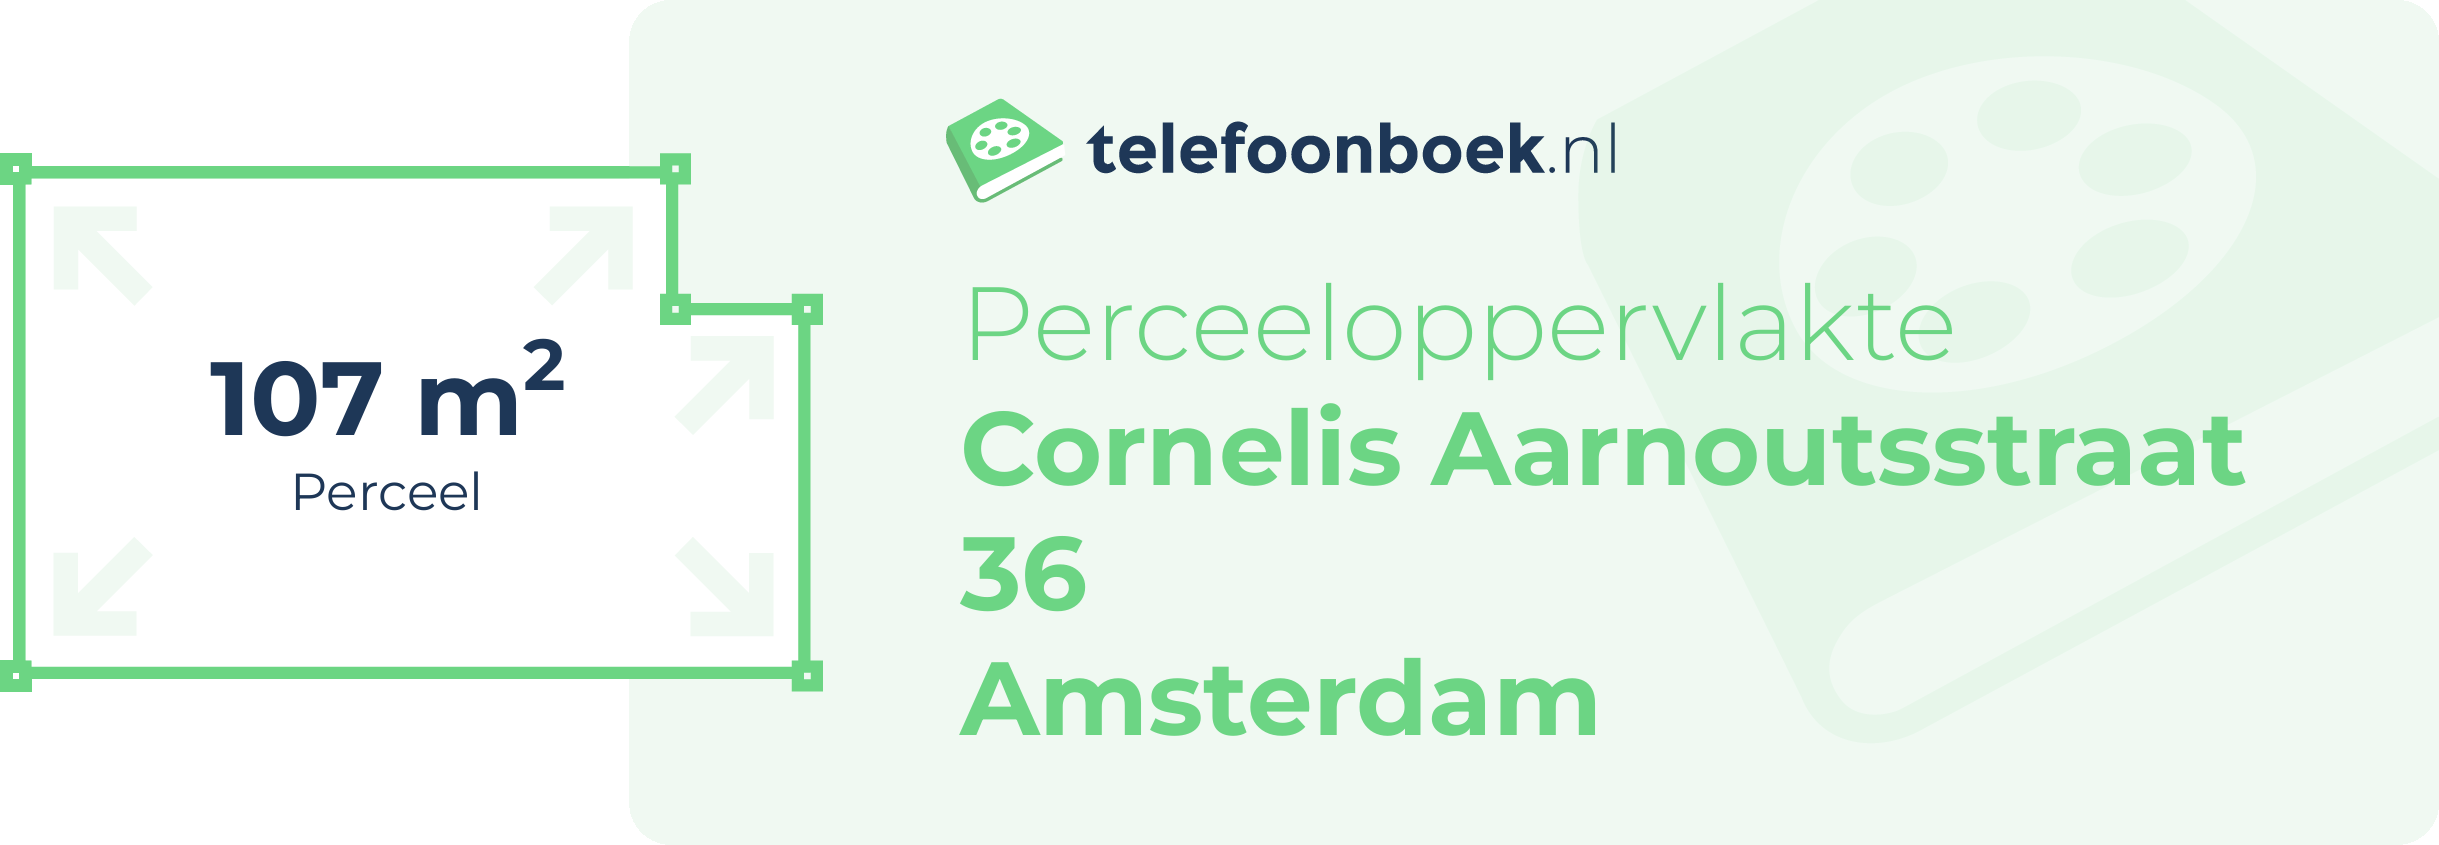 Perceeloppervlakte Cornelis Aarnoutsstraat 36 Amsterdam